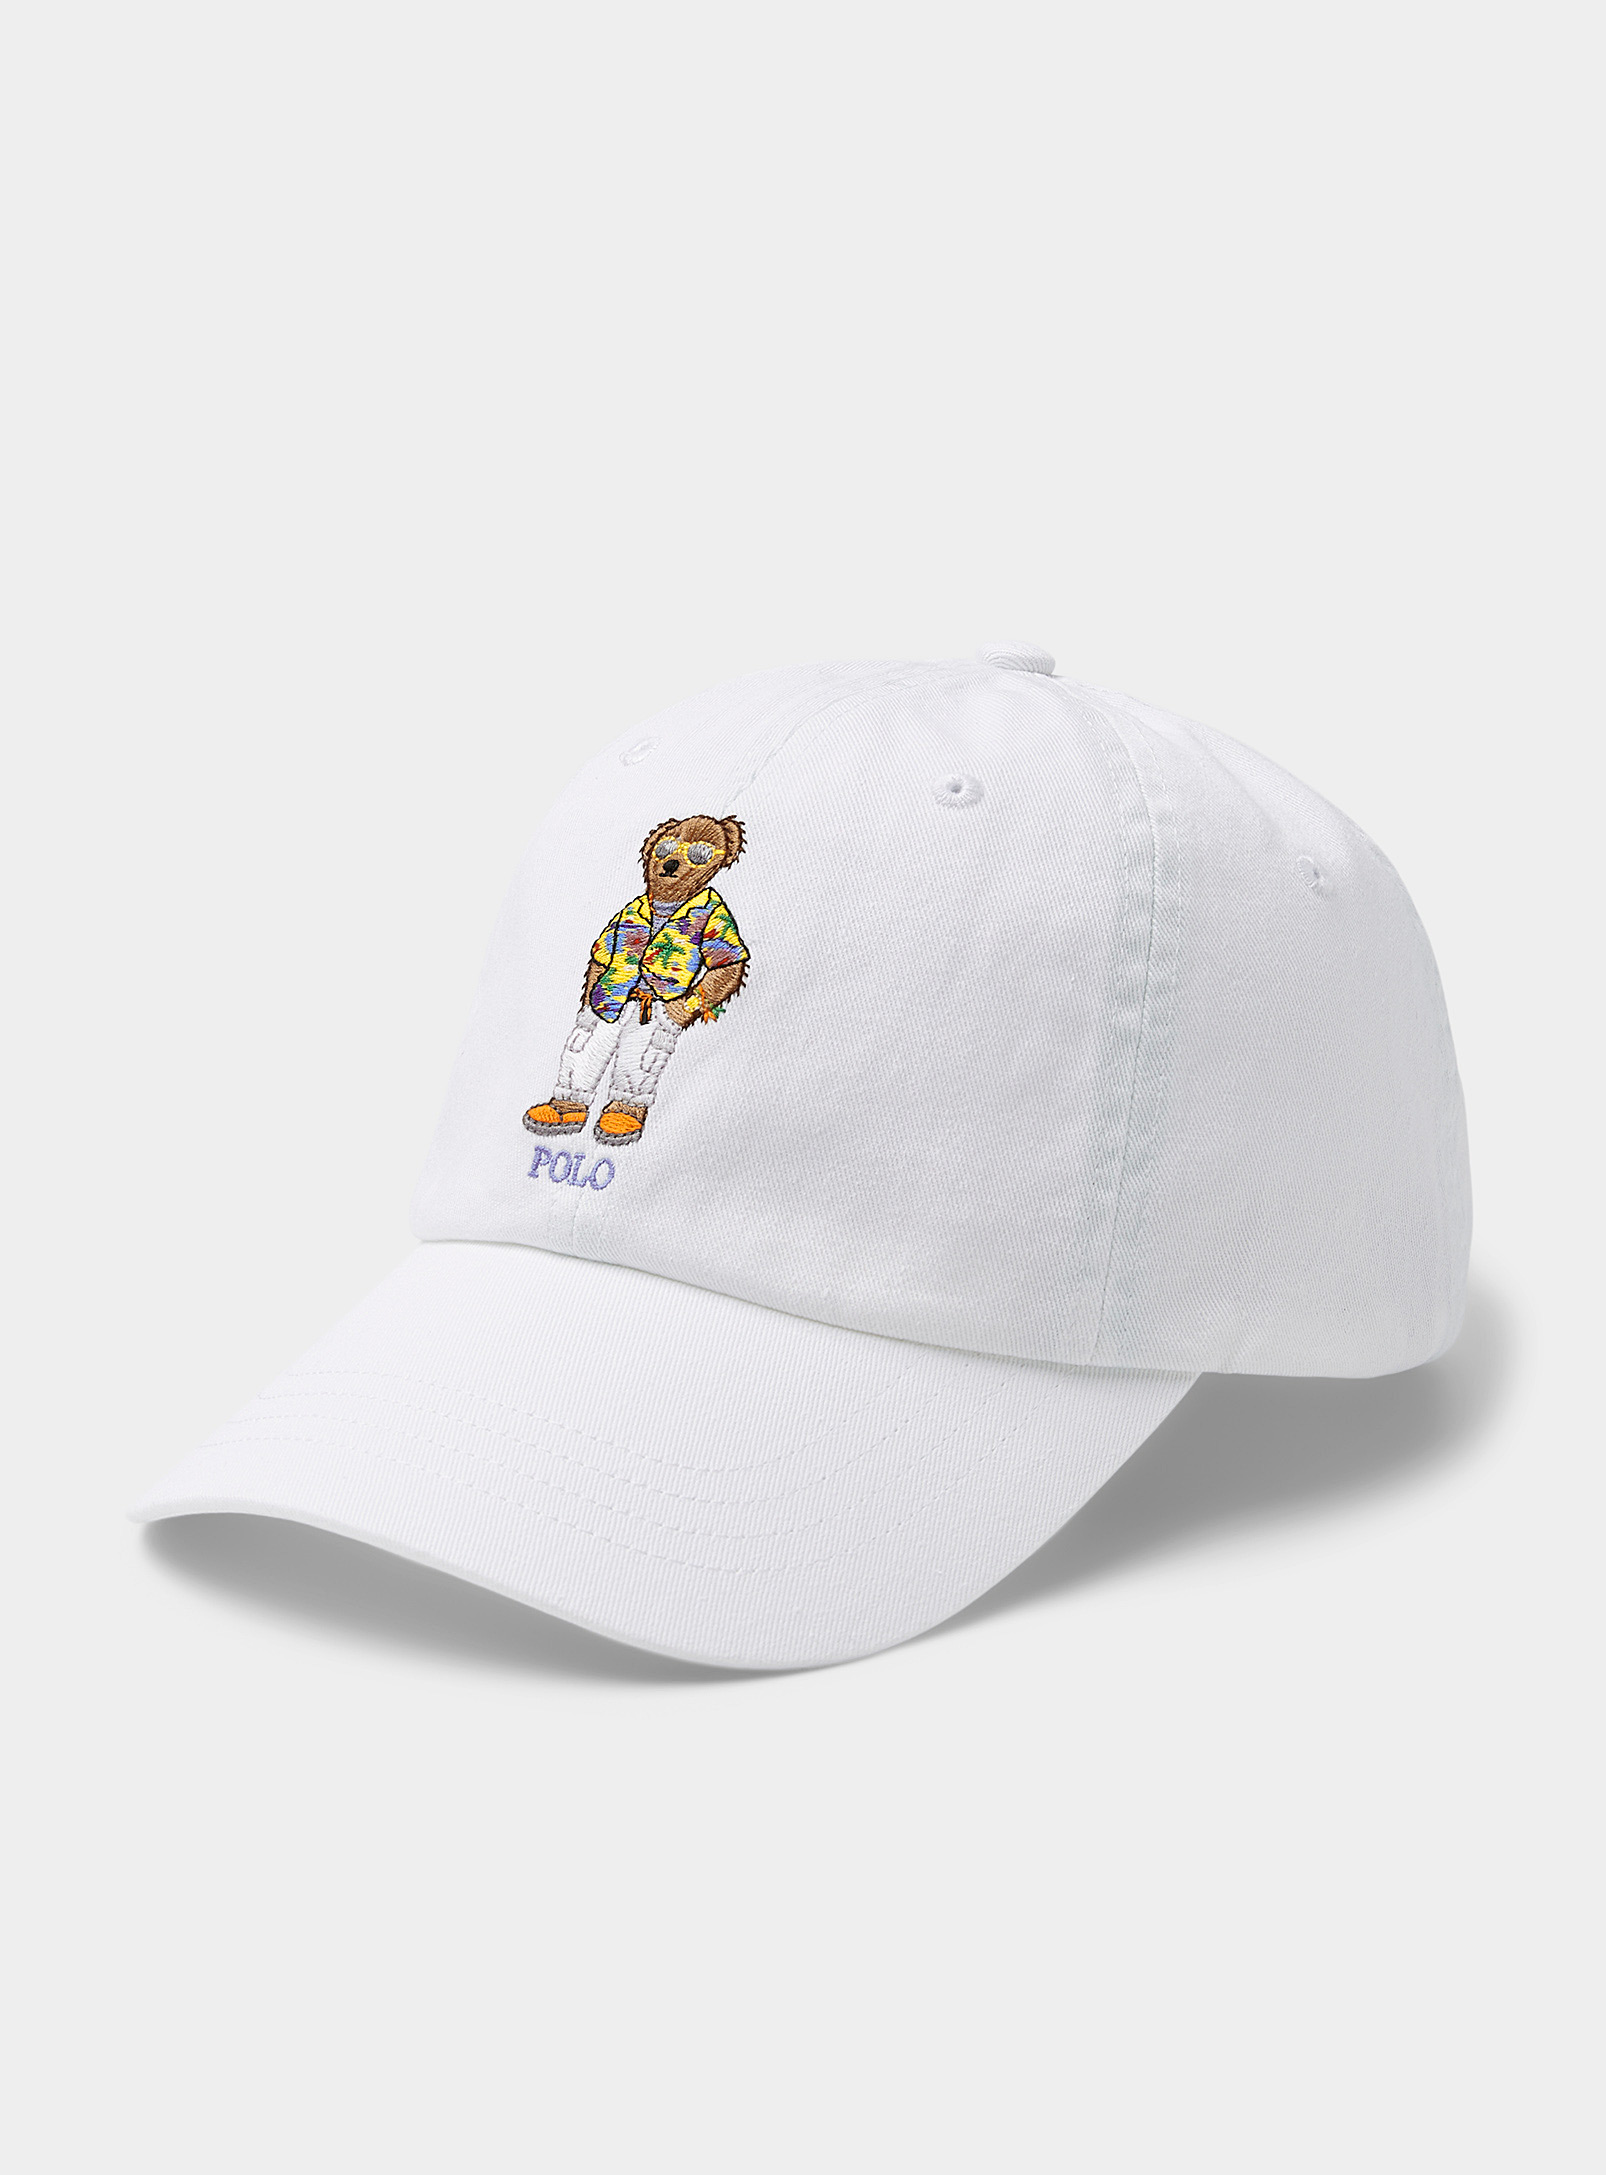 Polo Ralph Lauren - Men's Vacation teddy bear cap